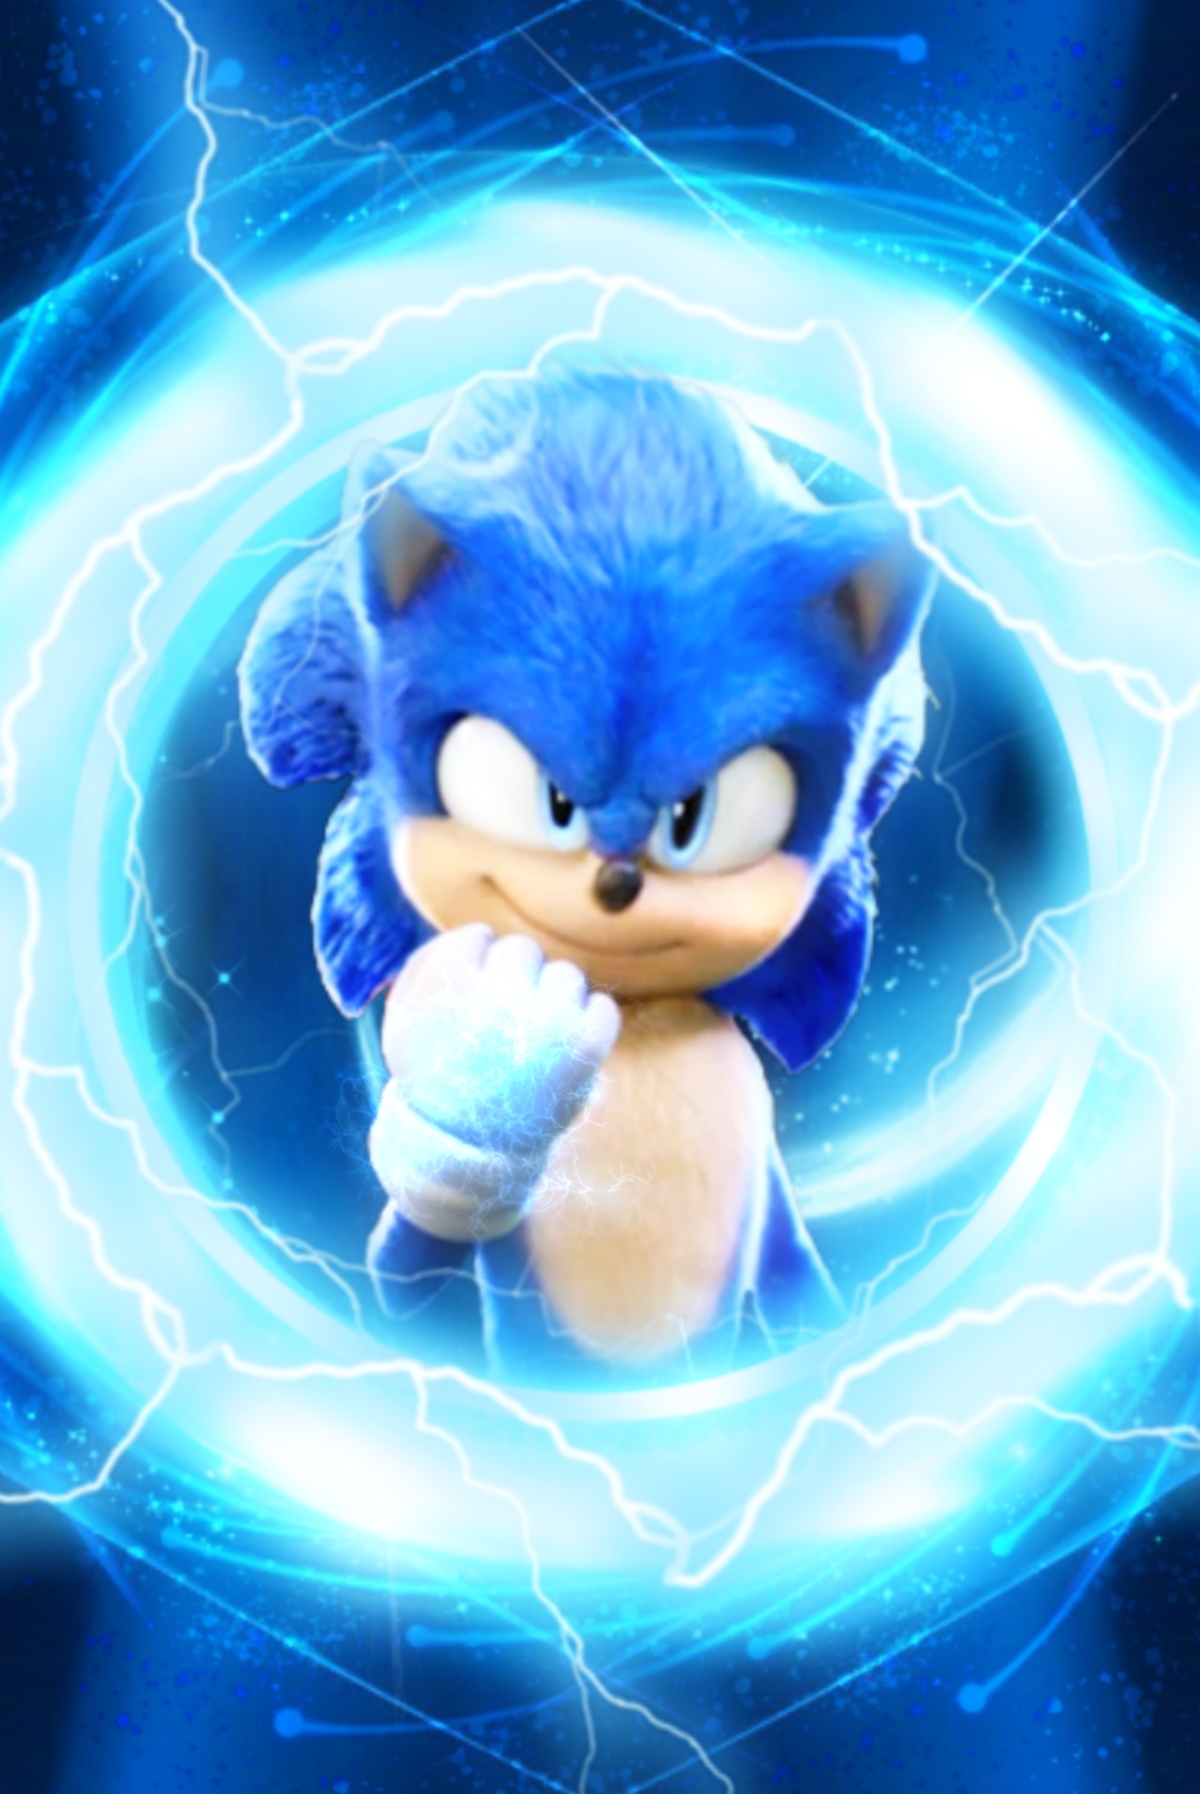 Sonic The Hedgehog 4 custom poster by Nikisawesom on DeviantArt